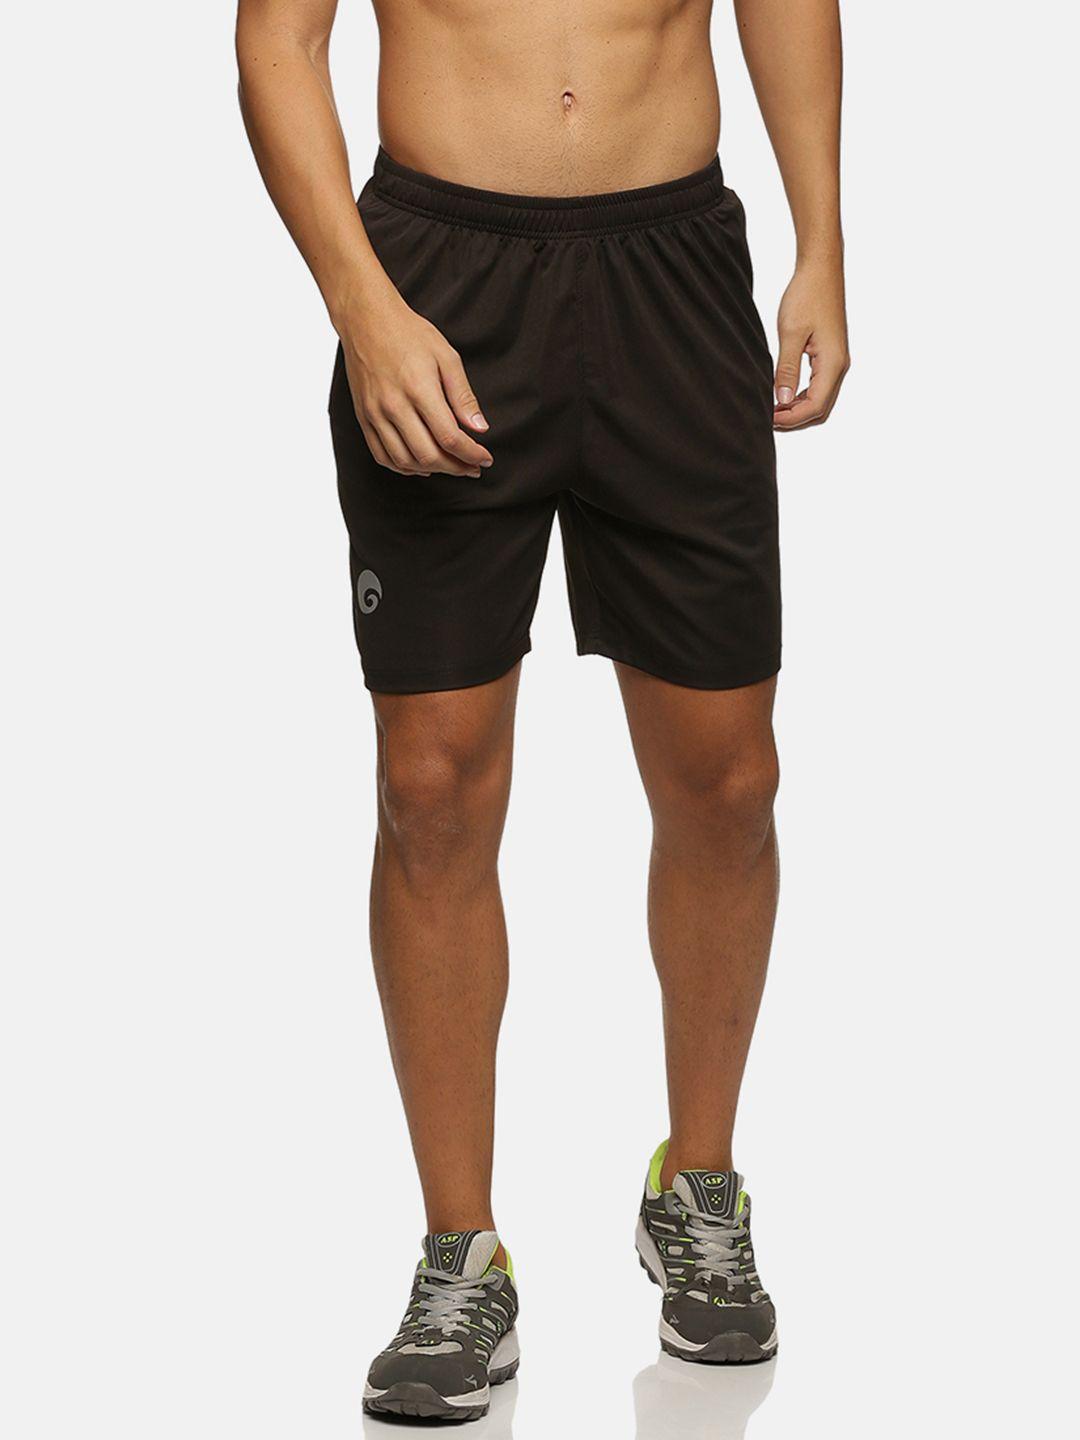 omtex men cotton training sports shorts